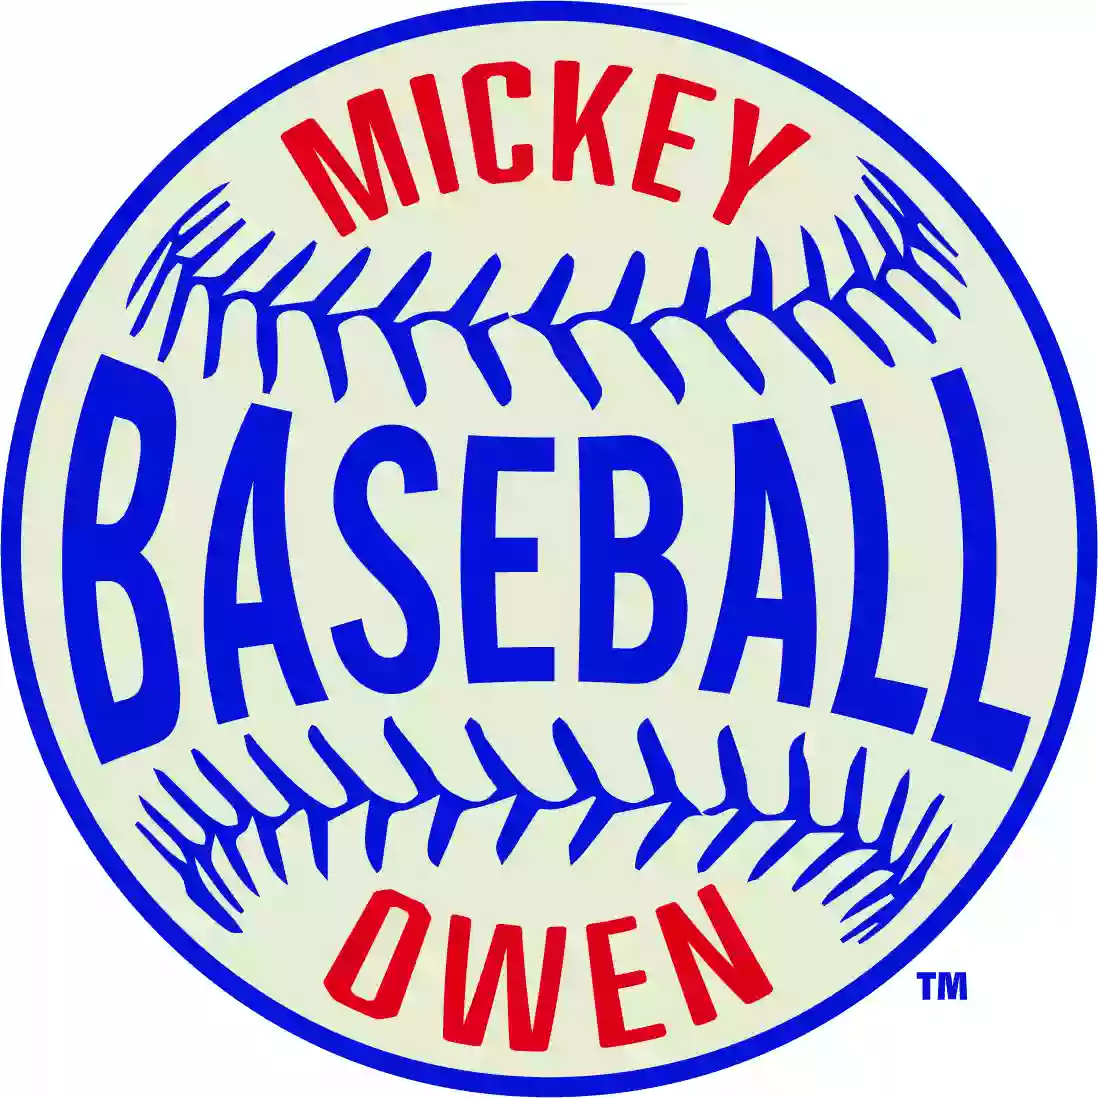 Mickey Owen Baseball School